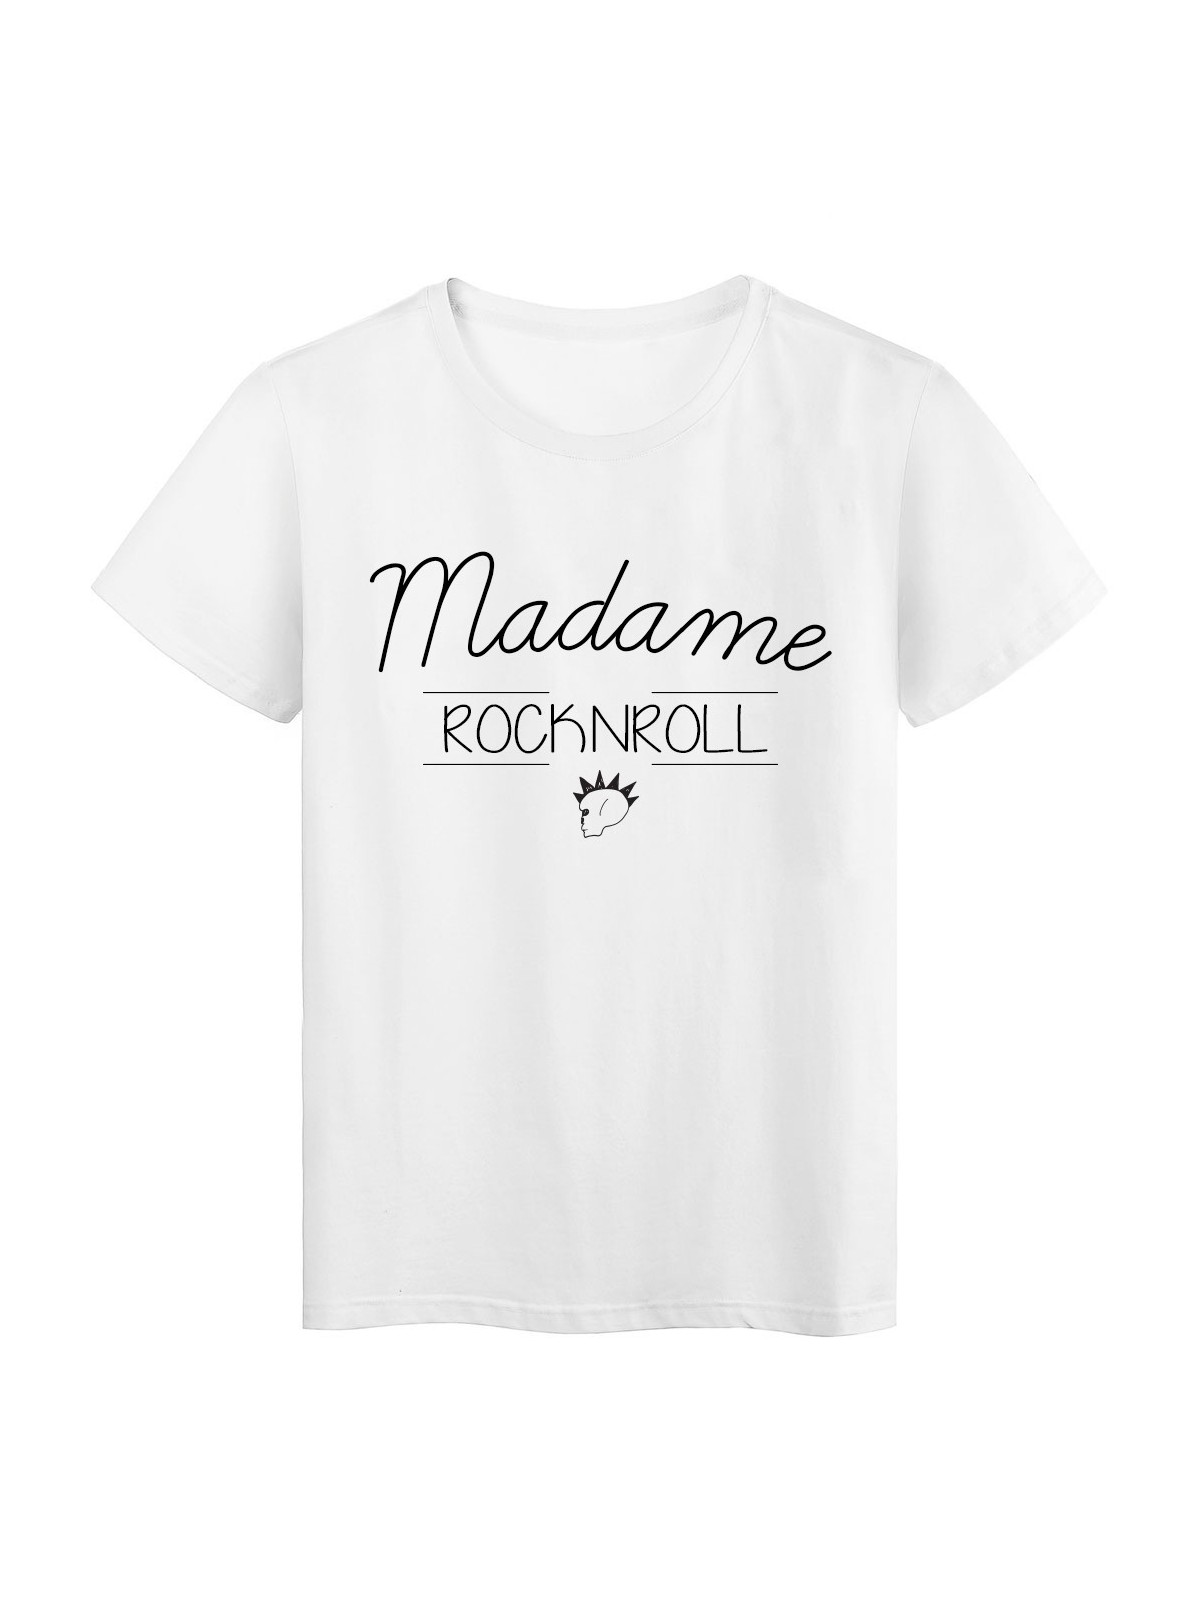 T-Shirt imprimÃ© humour design Madame Rock n roll rÃ©f 2198